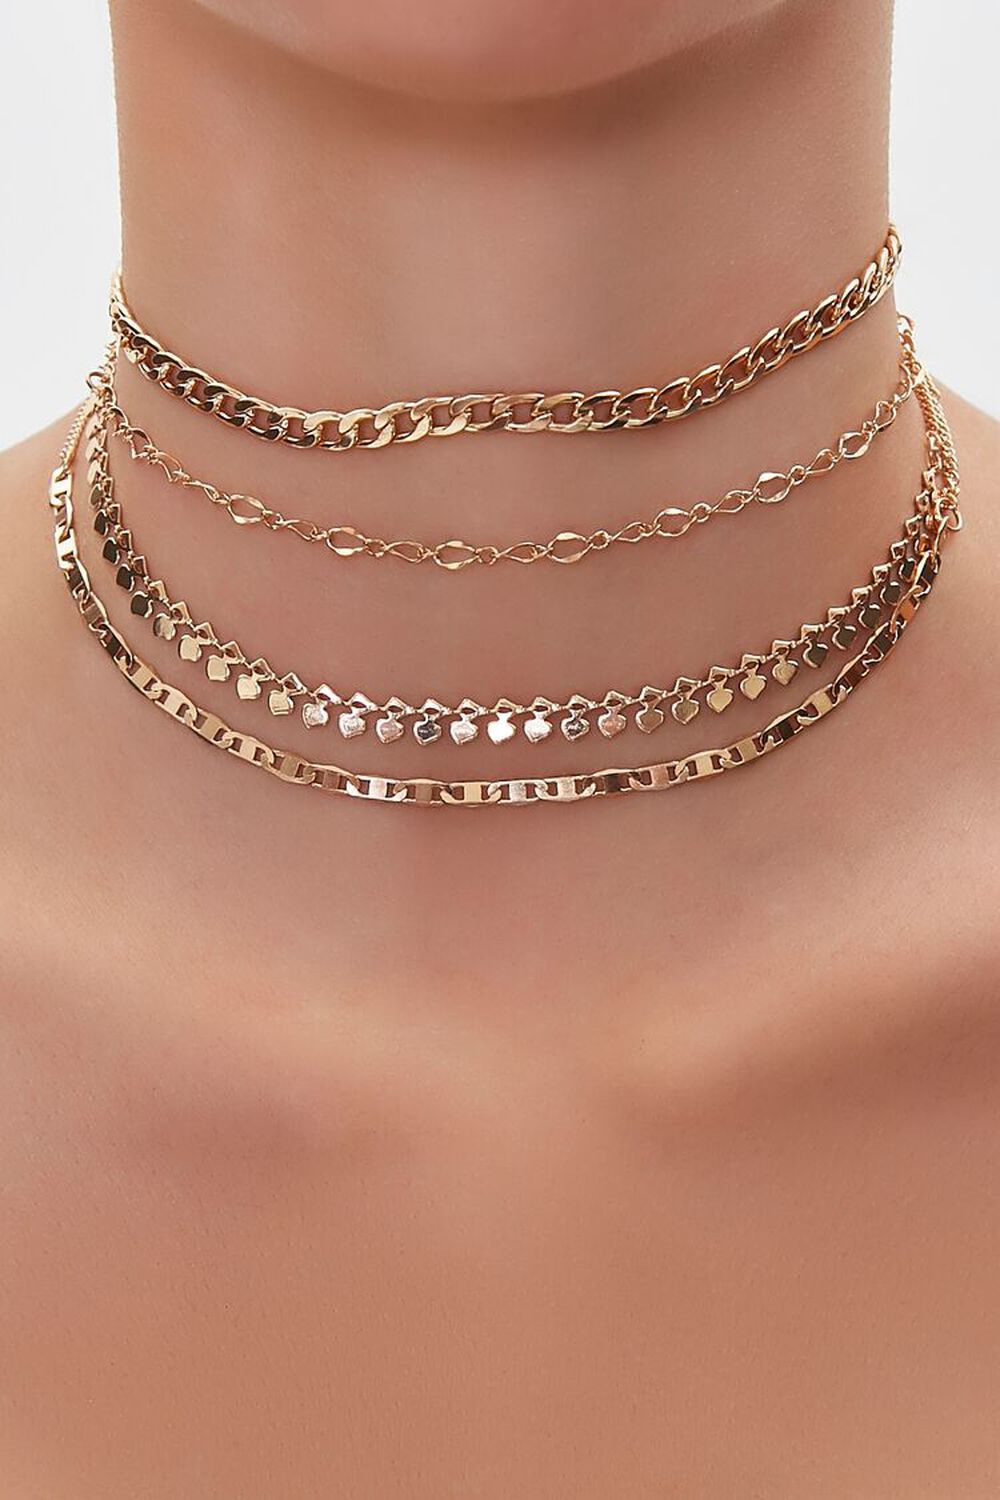 GOLD Chain Choker Necklace Set, image 1